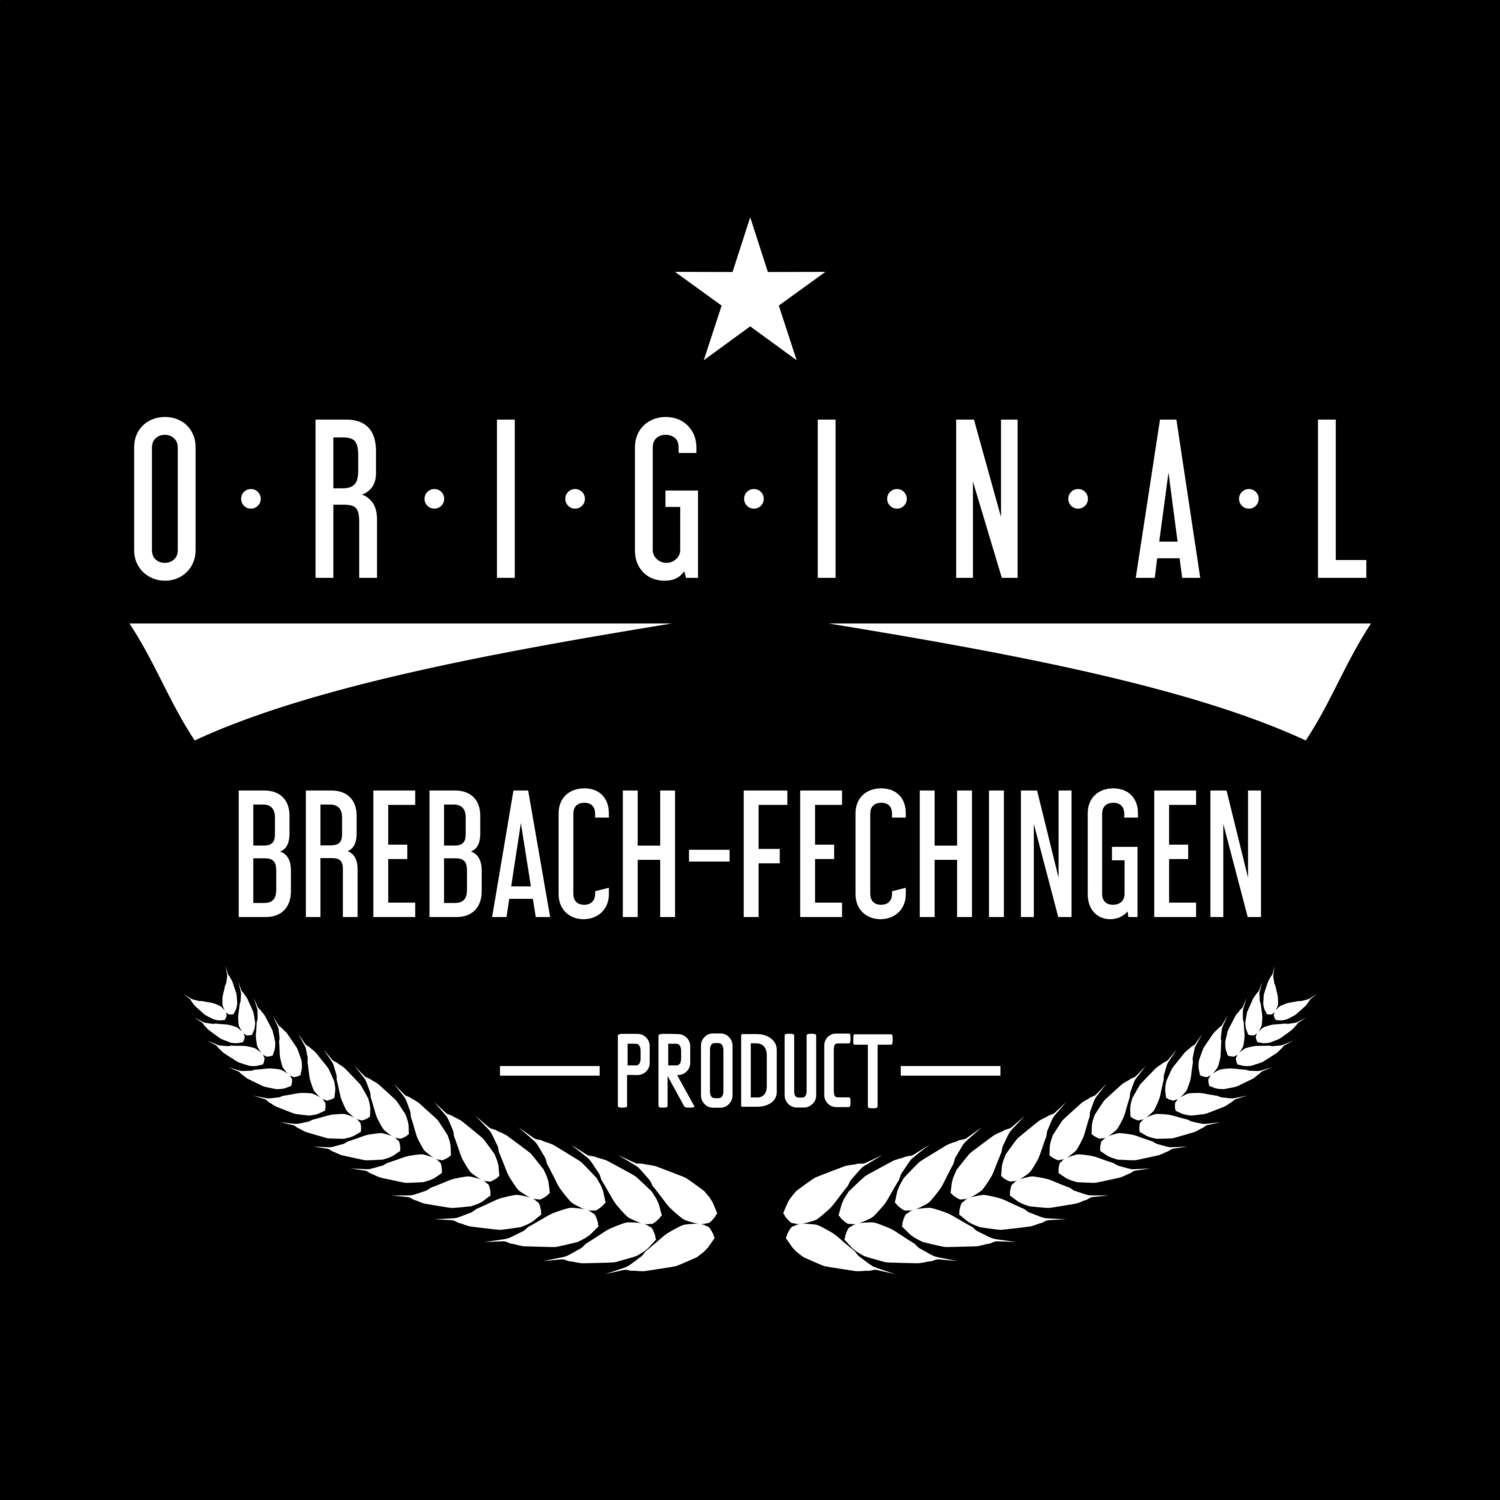 Brebach-Fechingen T-Shirt »Original Product«